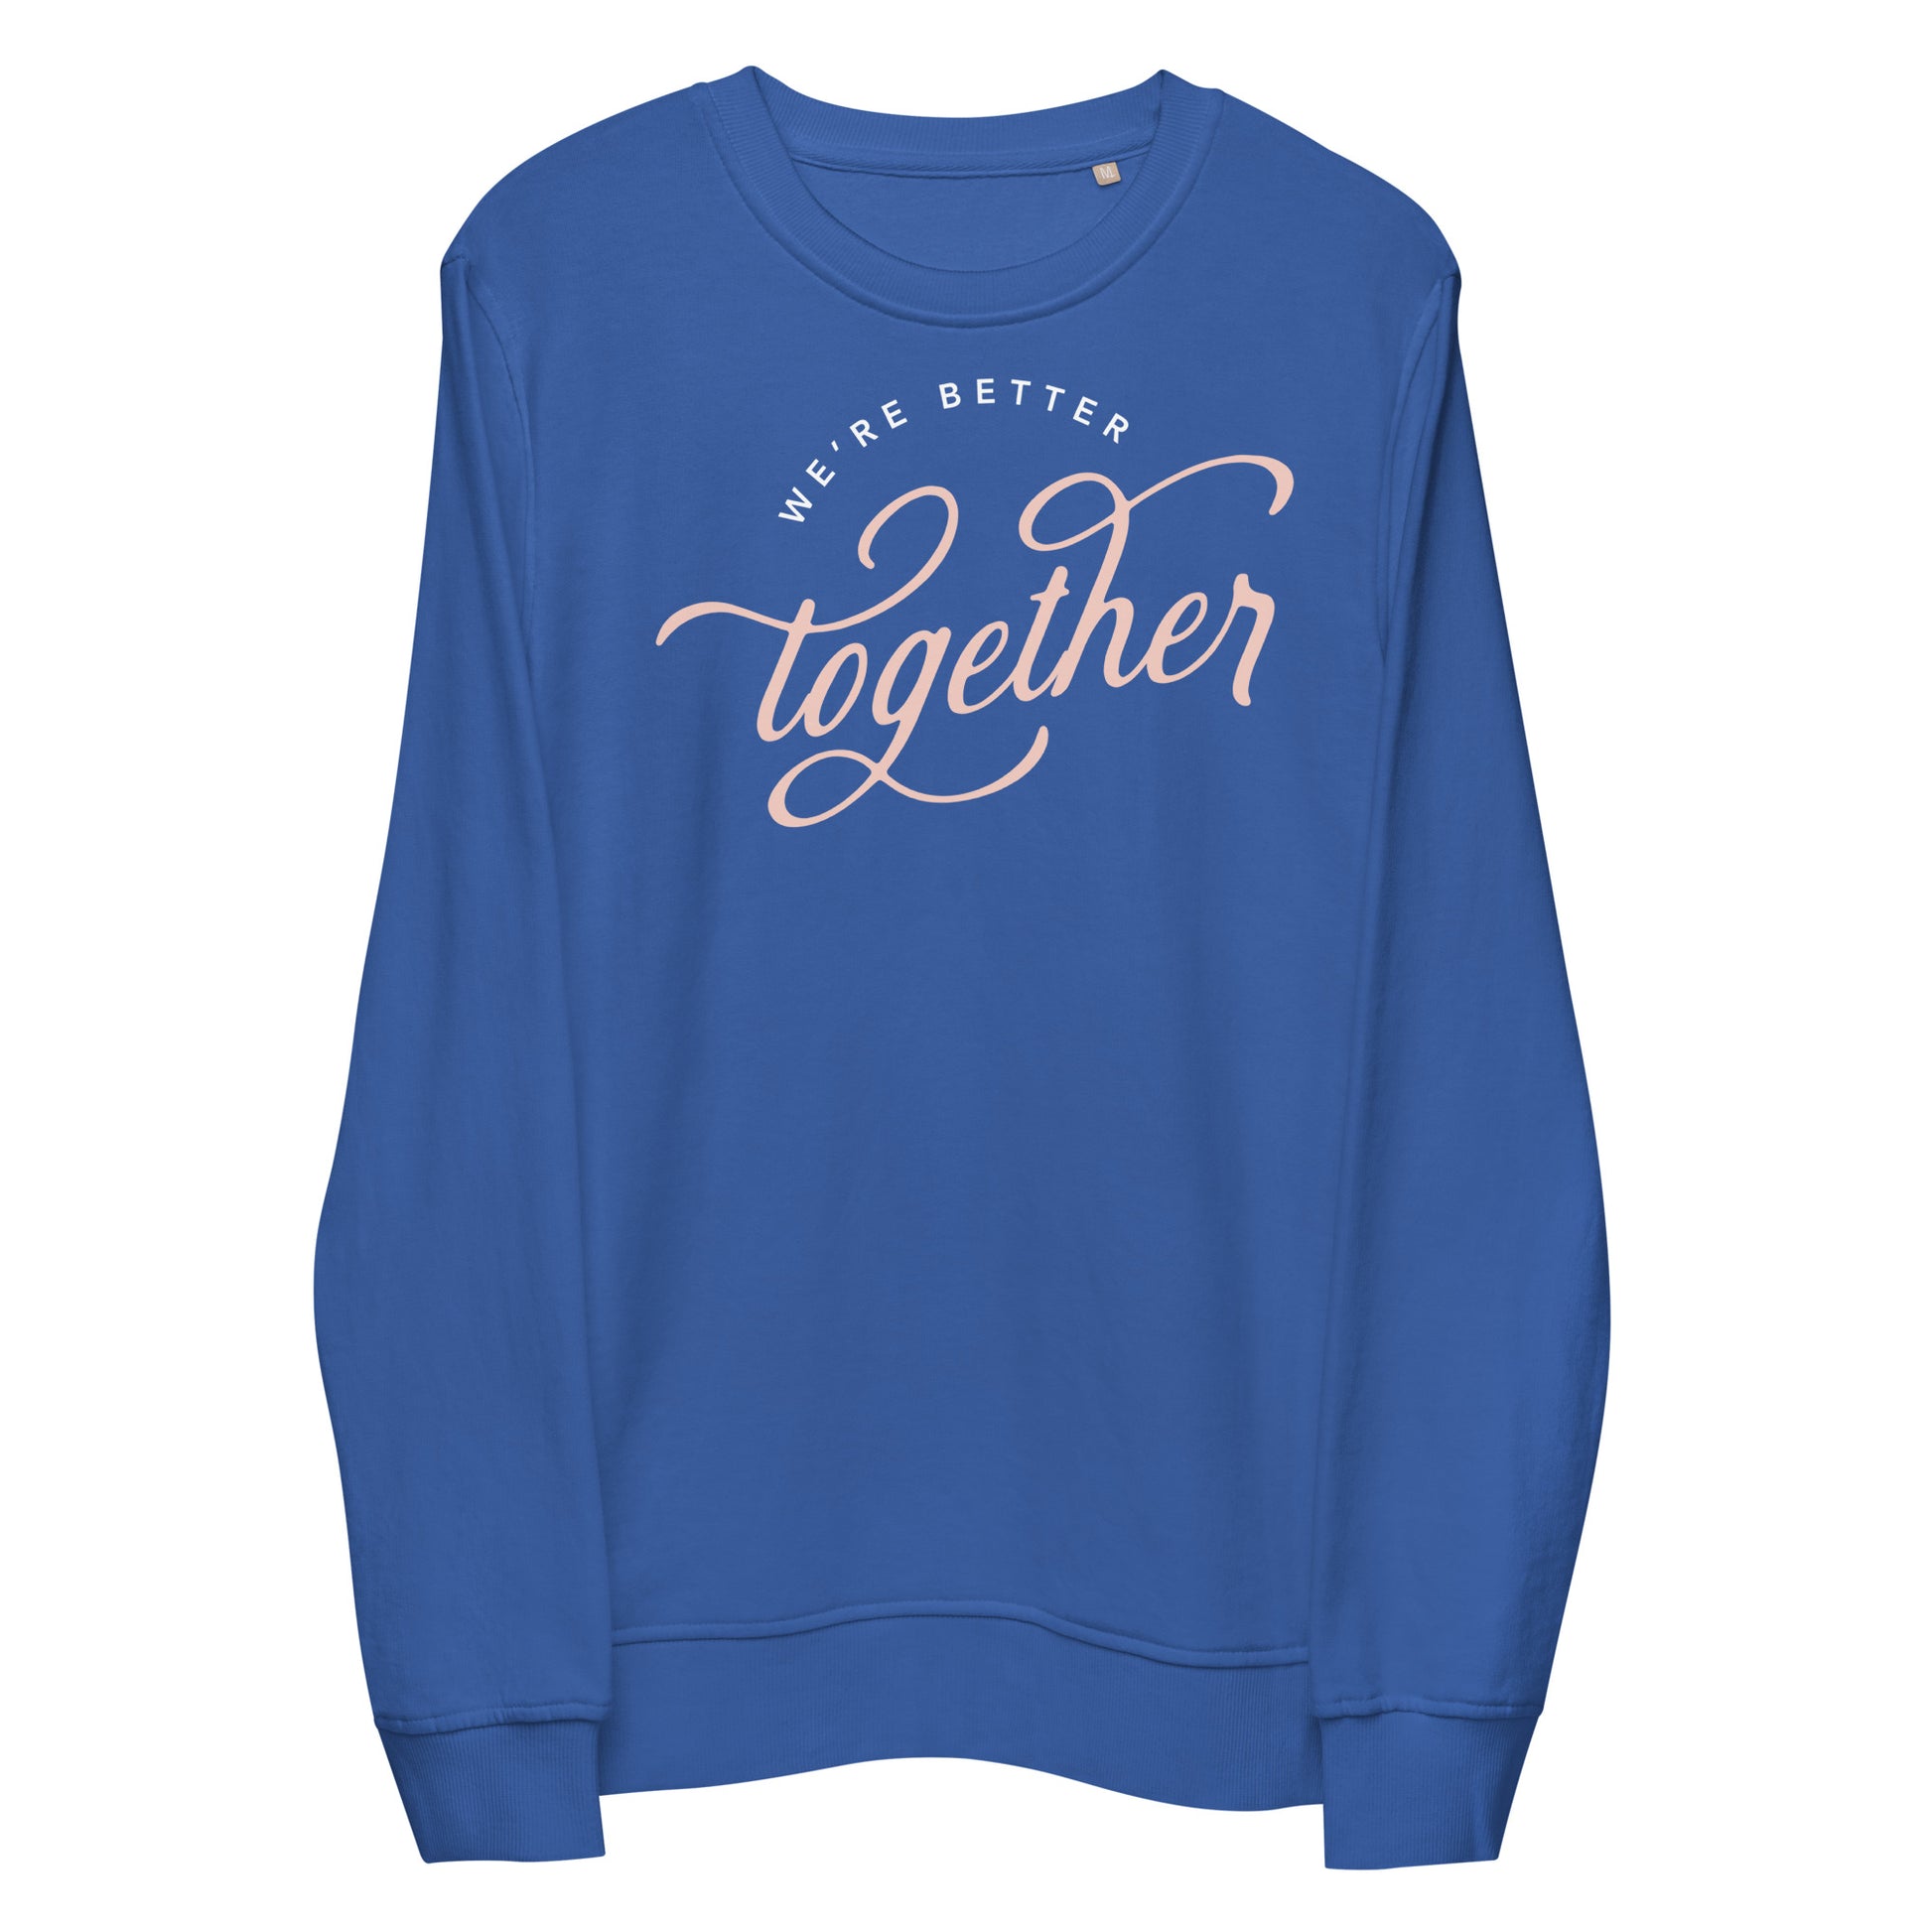 We're Better Together Sweatshirt in blue 